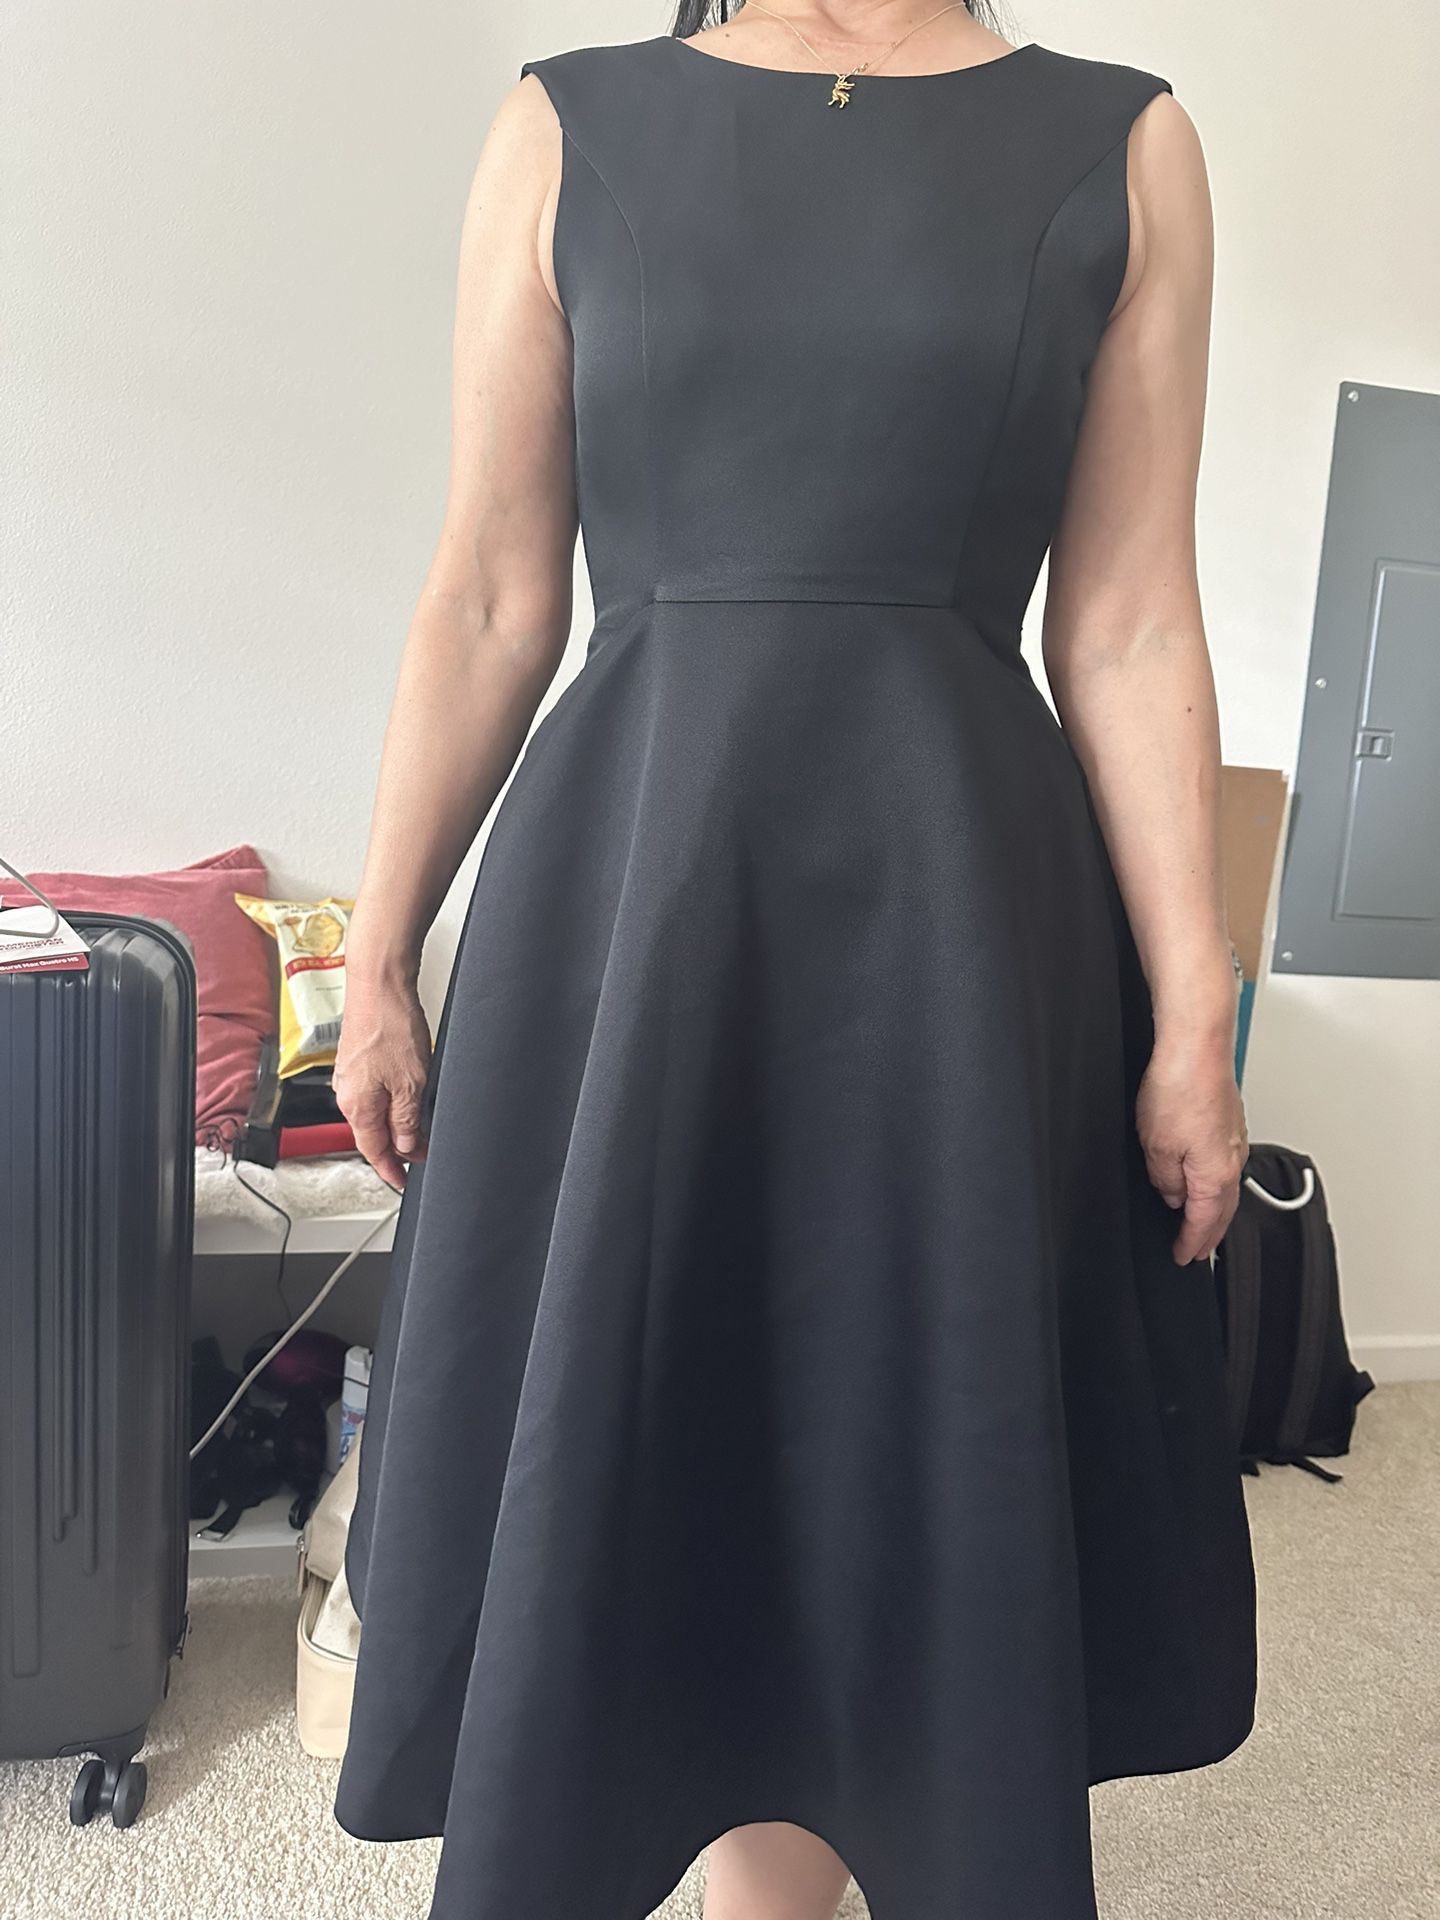 Black Formal Dress+ Coat